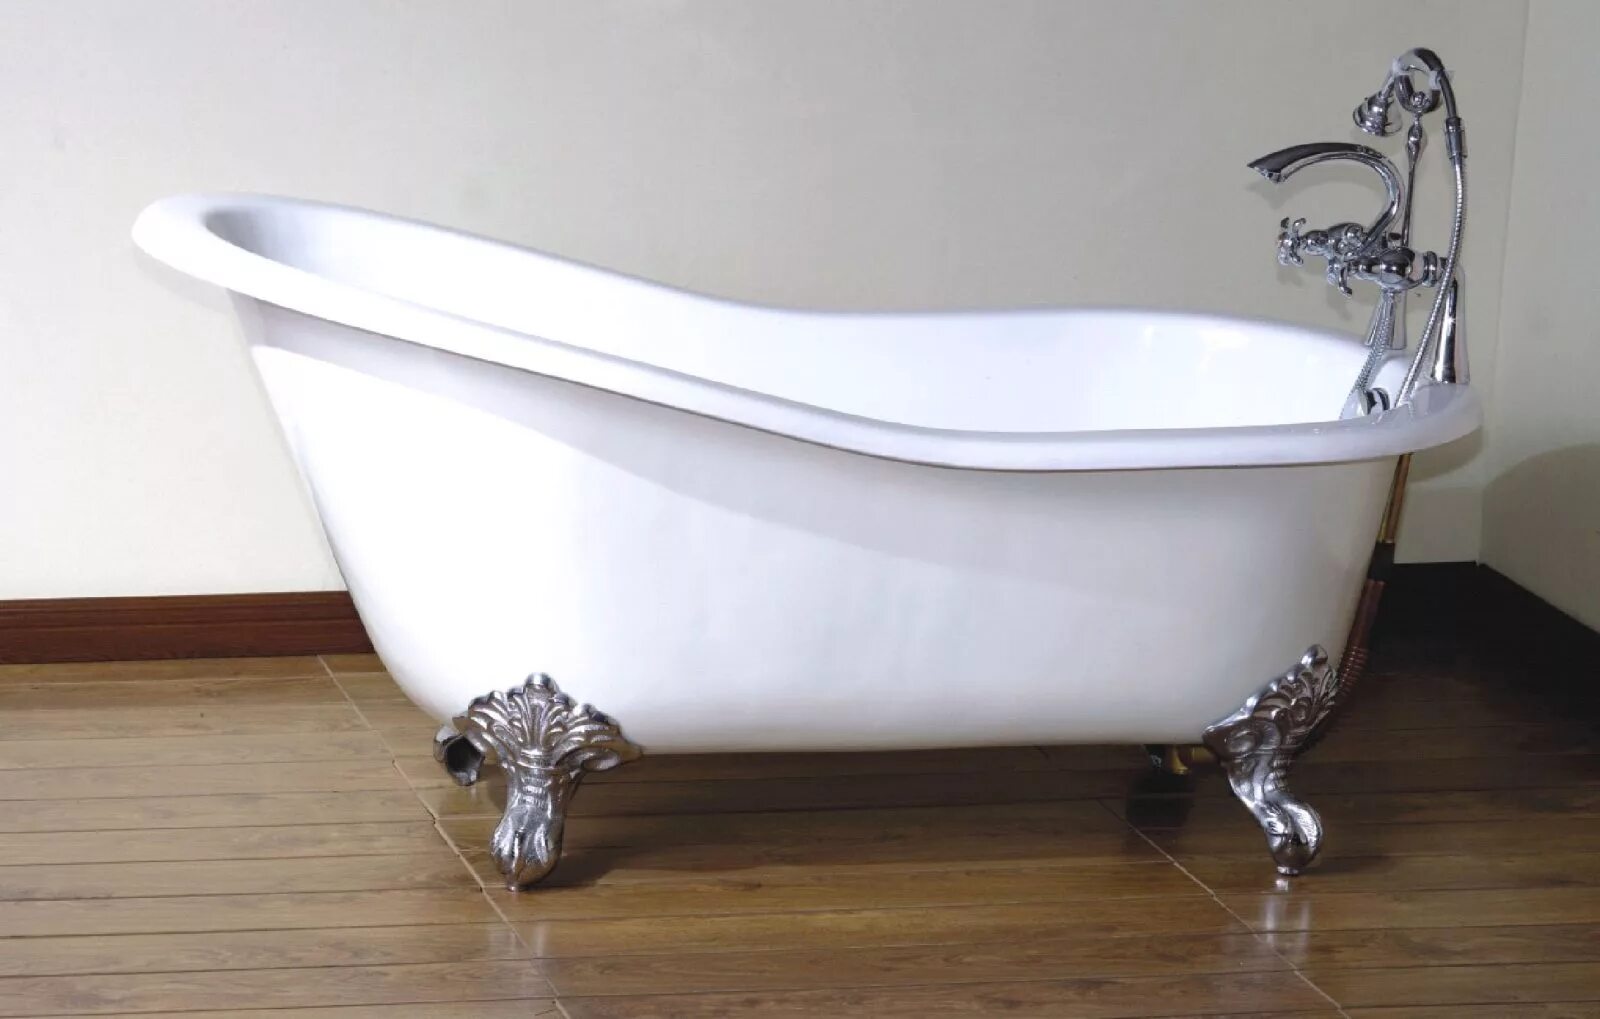 Ванна Recor Slipper 170x76 чугун, белая. Ванна чугунная Recor Antique. Ванна Recor Dakota 137x74 чугун. Ванна отдельностоящая 160*80. Бузулук ванны